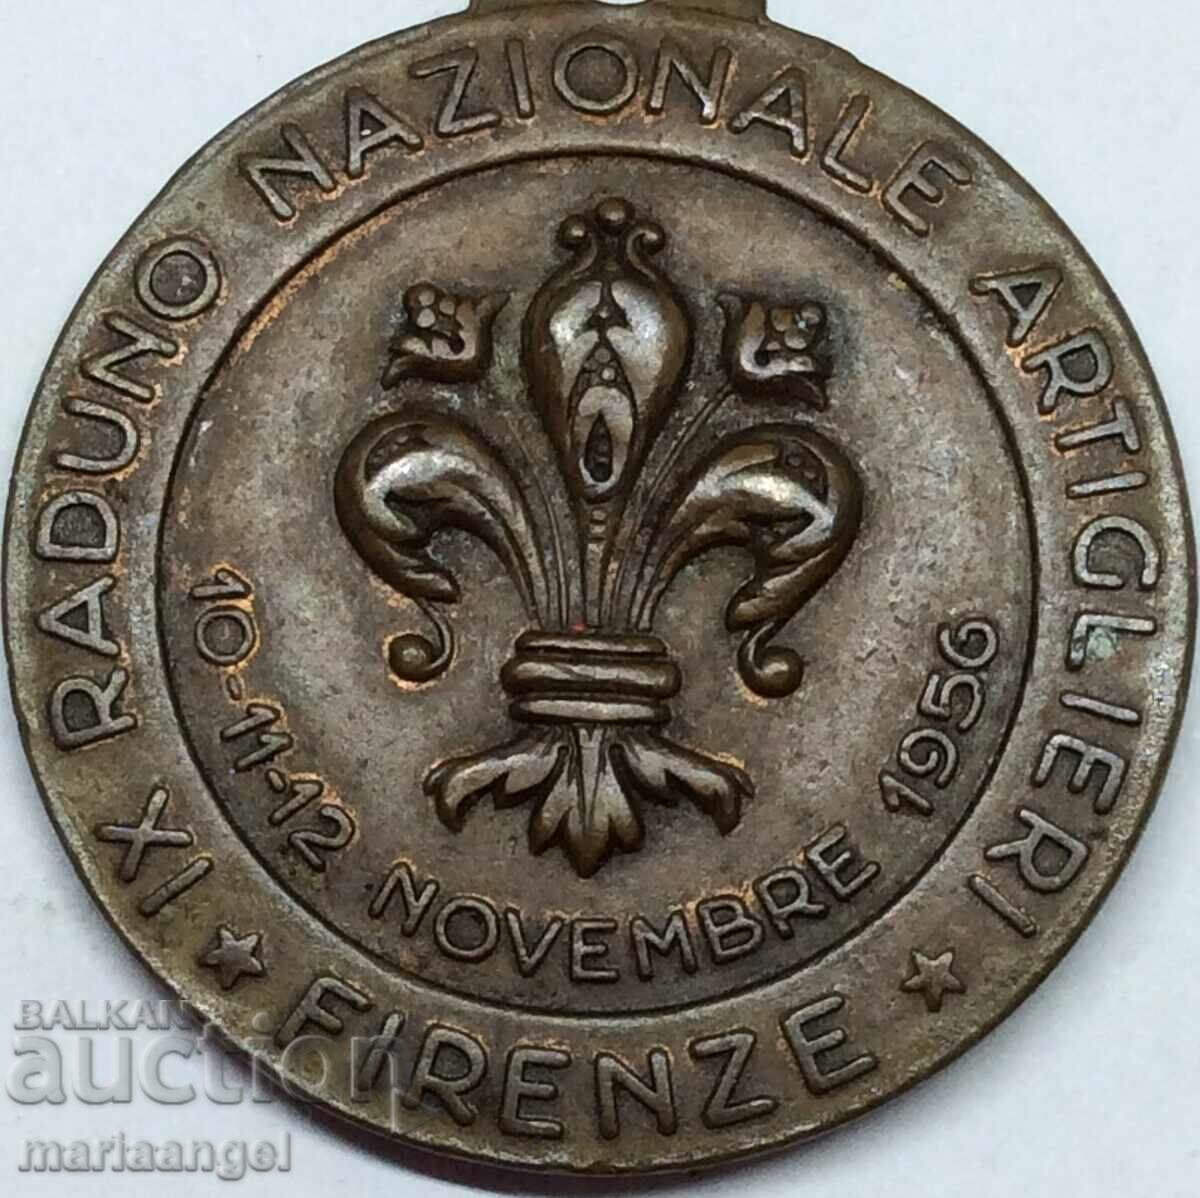 Italy 1956 "National Artillery Congress" medal 30mm